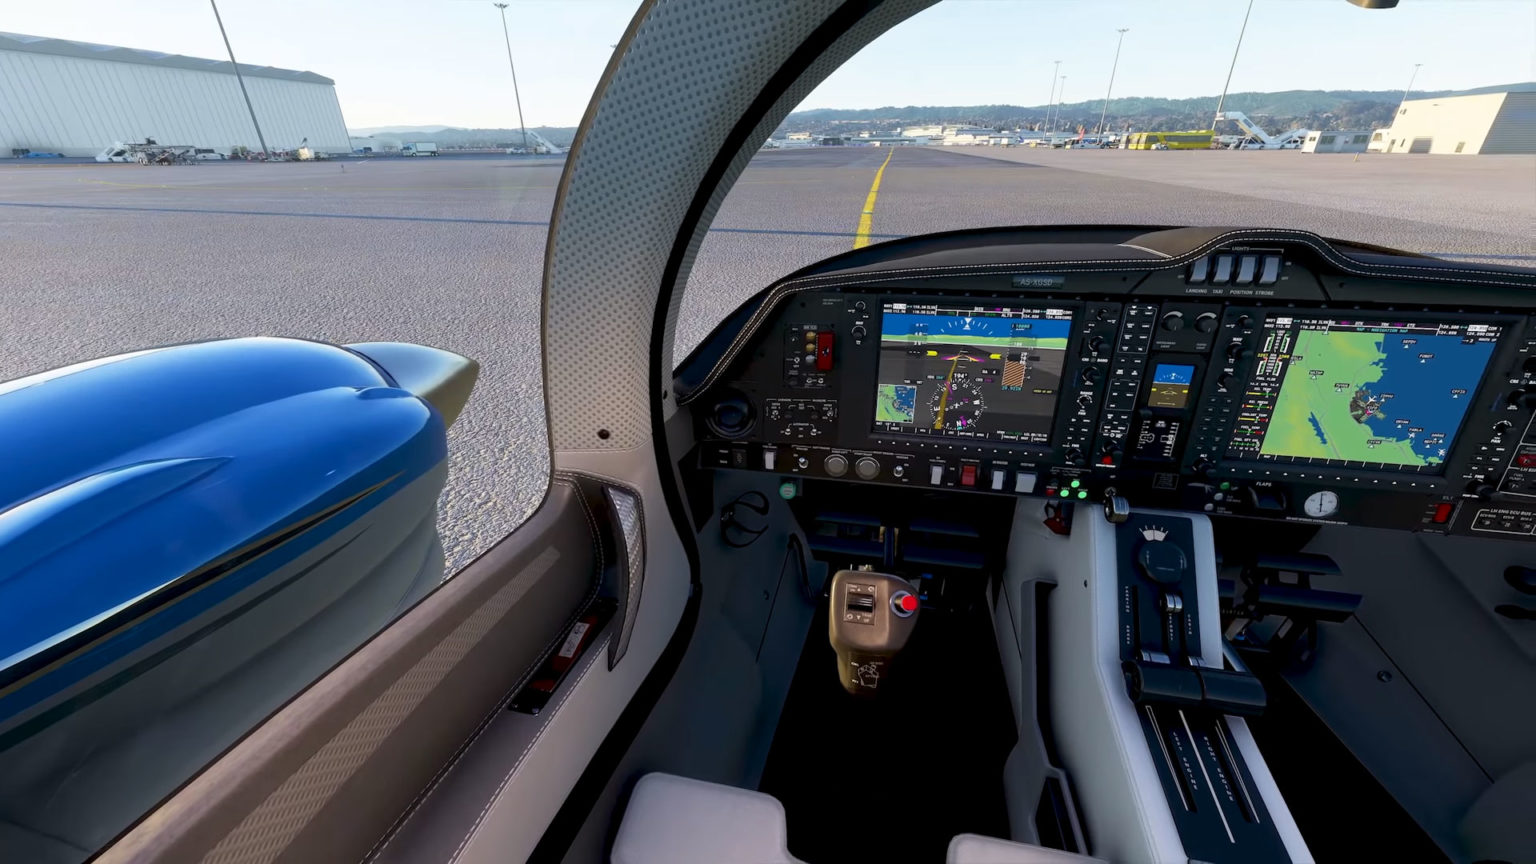 microsoft flight simulator 2020 download issues